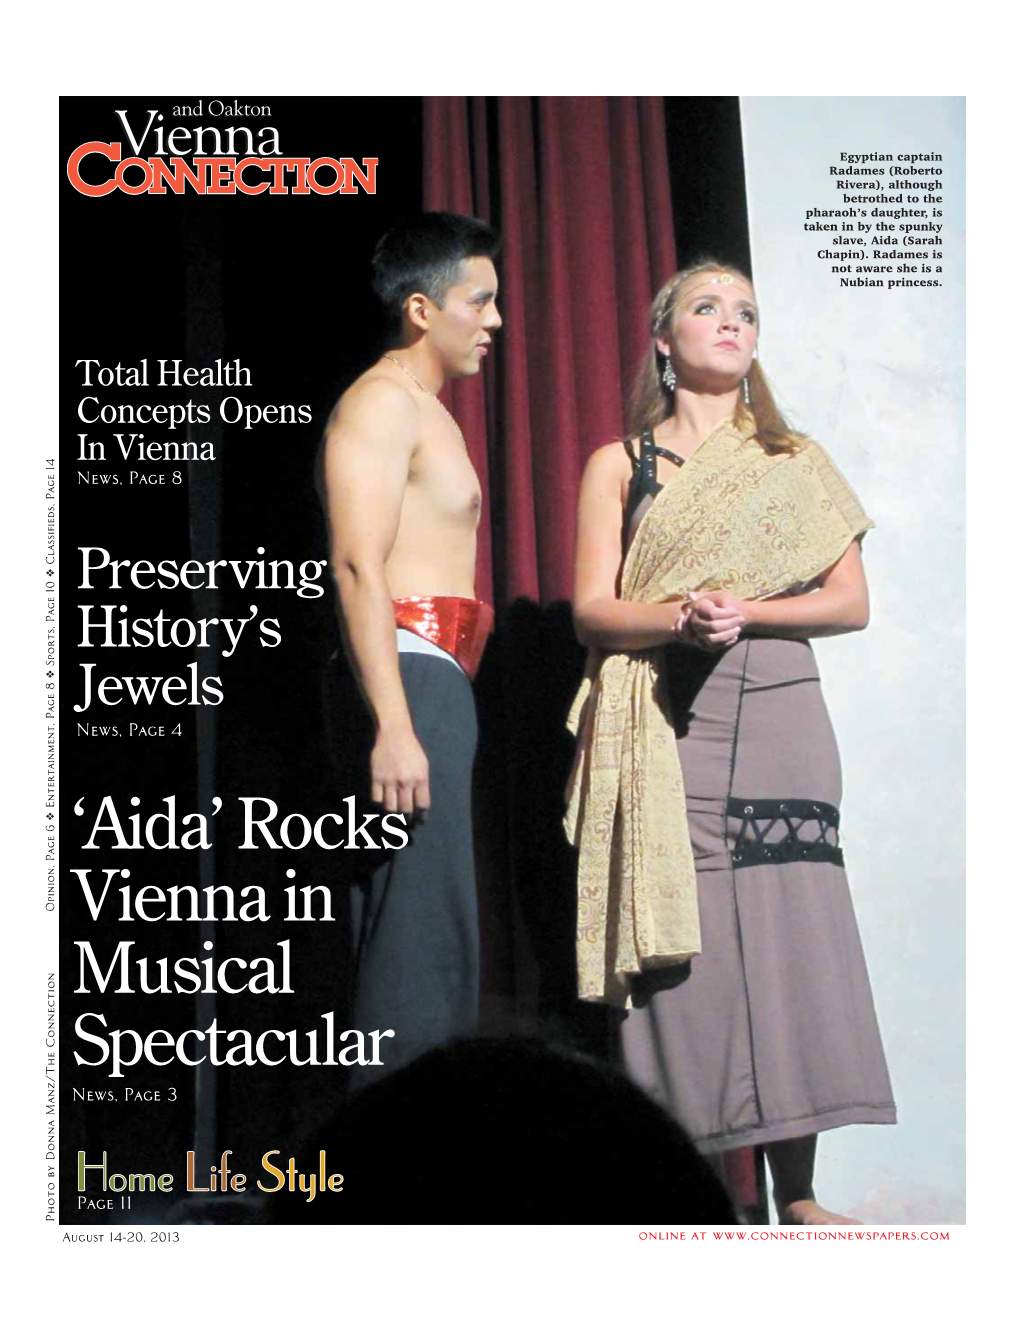 'Aida' Rocks Vienna in Musical Spectacular